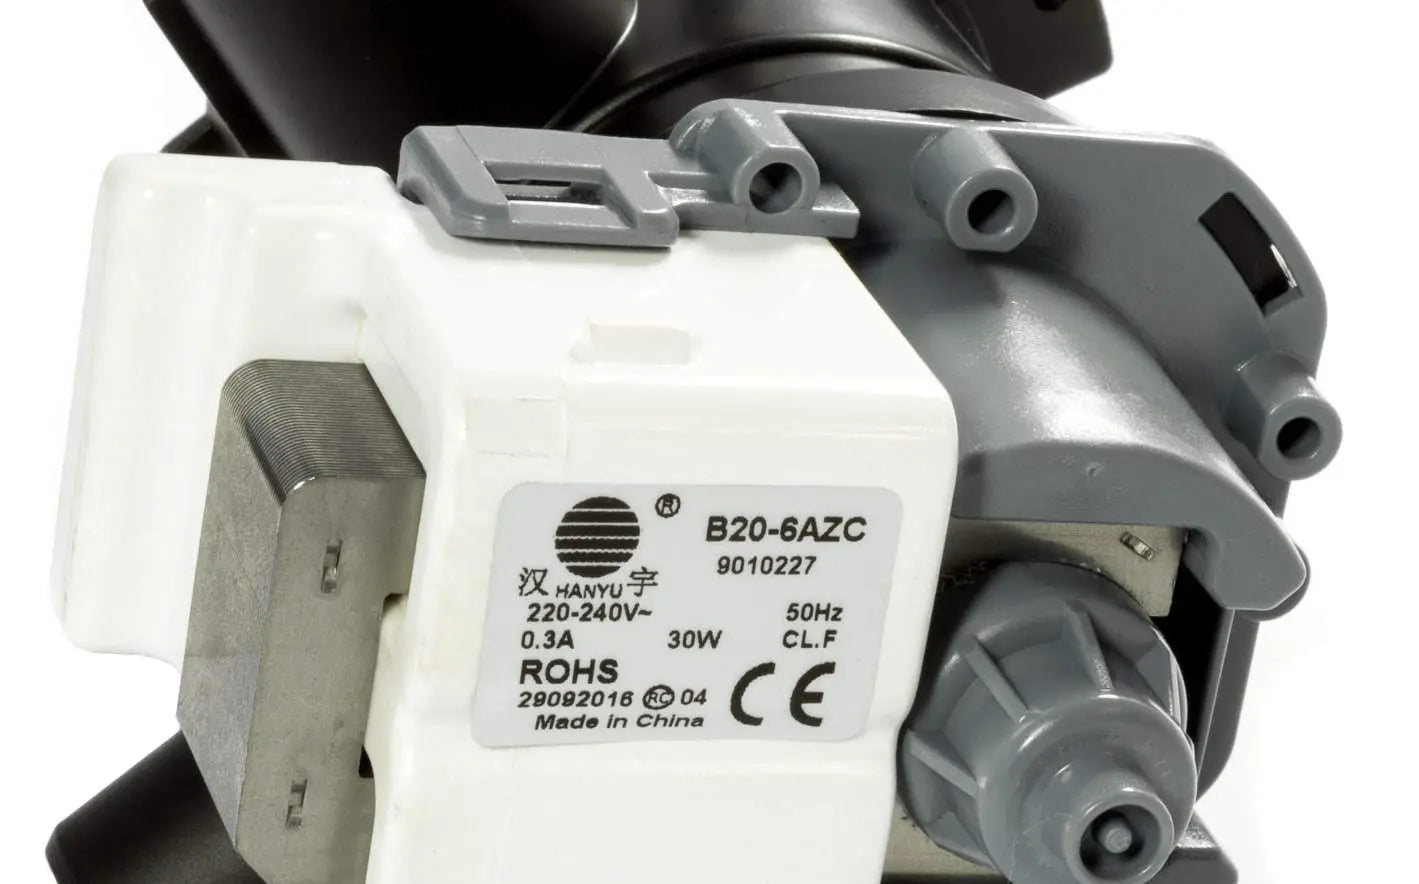 Pompa scarico lavatrice Bosch 30w  220-240v  50hz  0.3a. rast 5 BOSCH SIEMENS